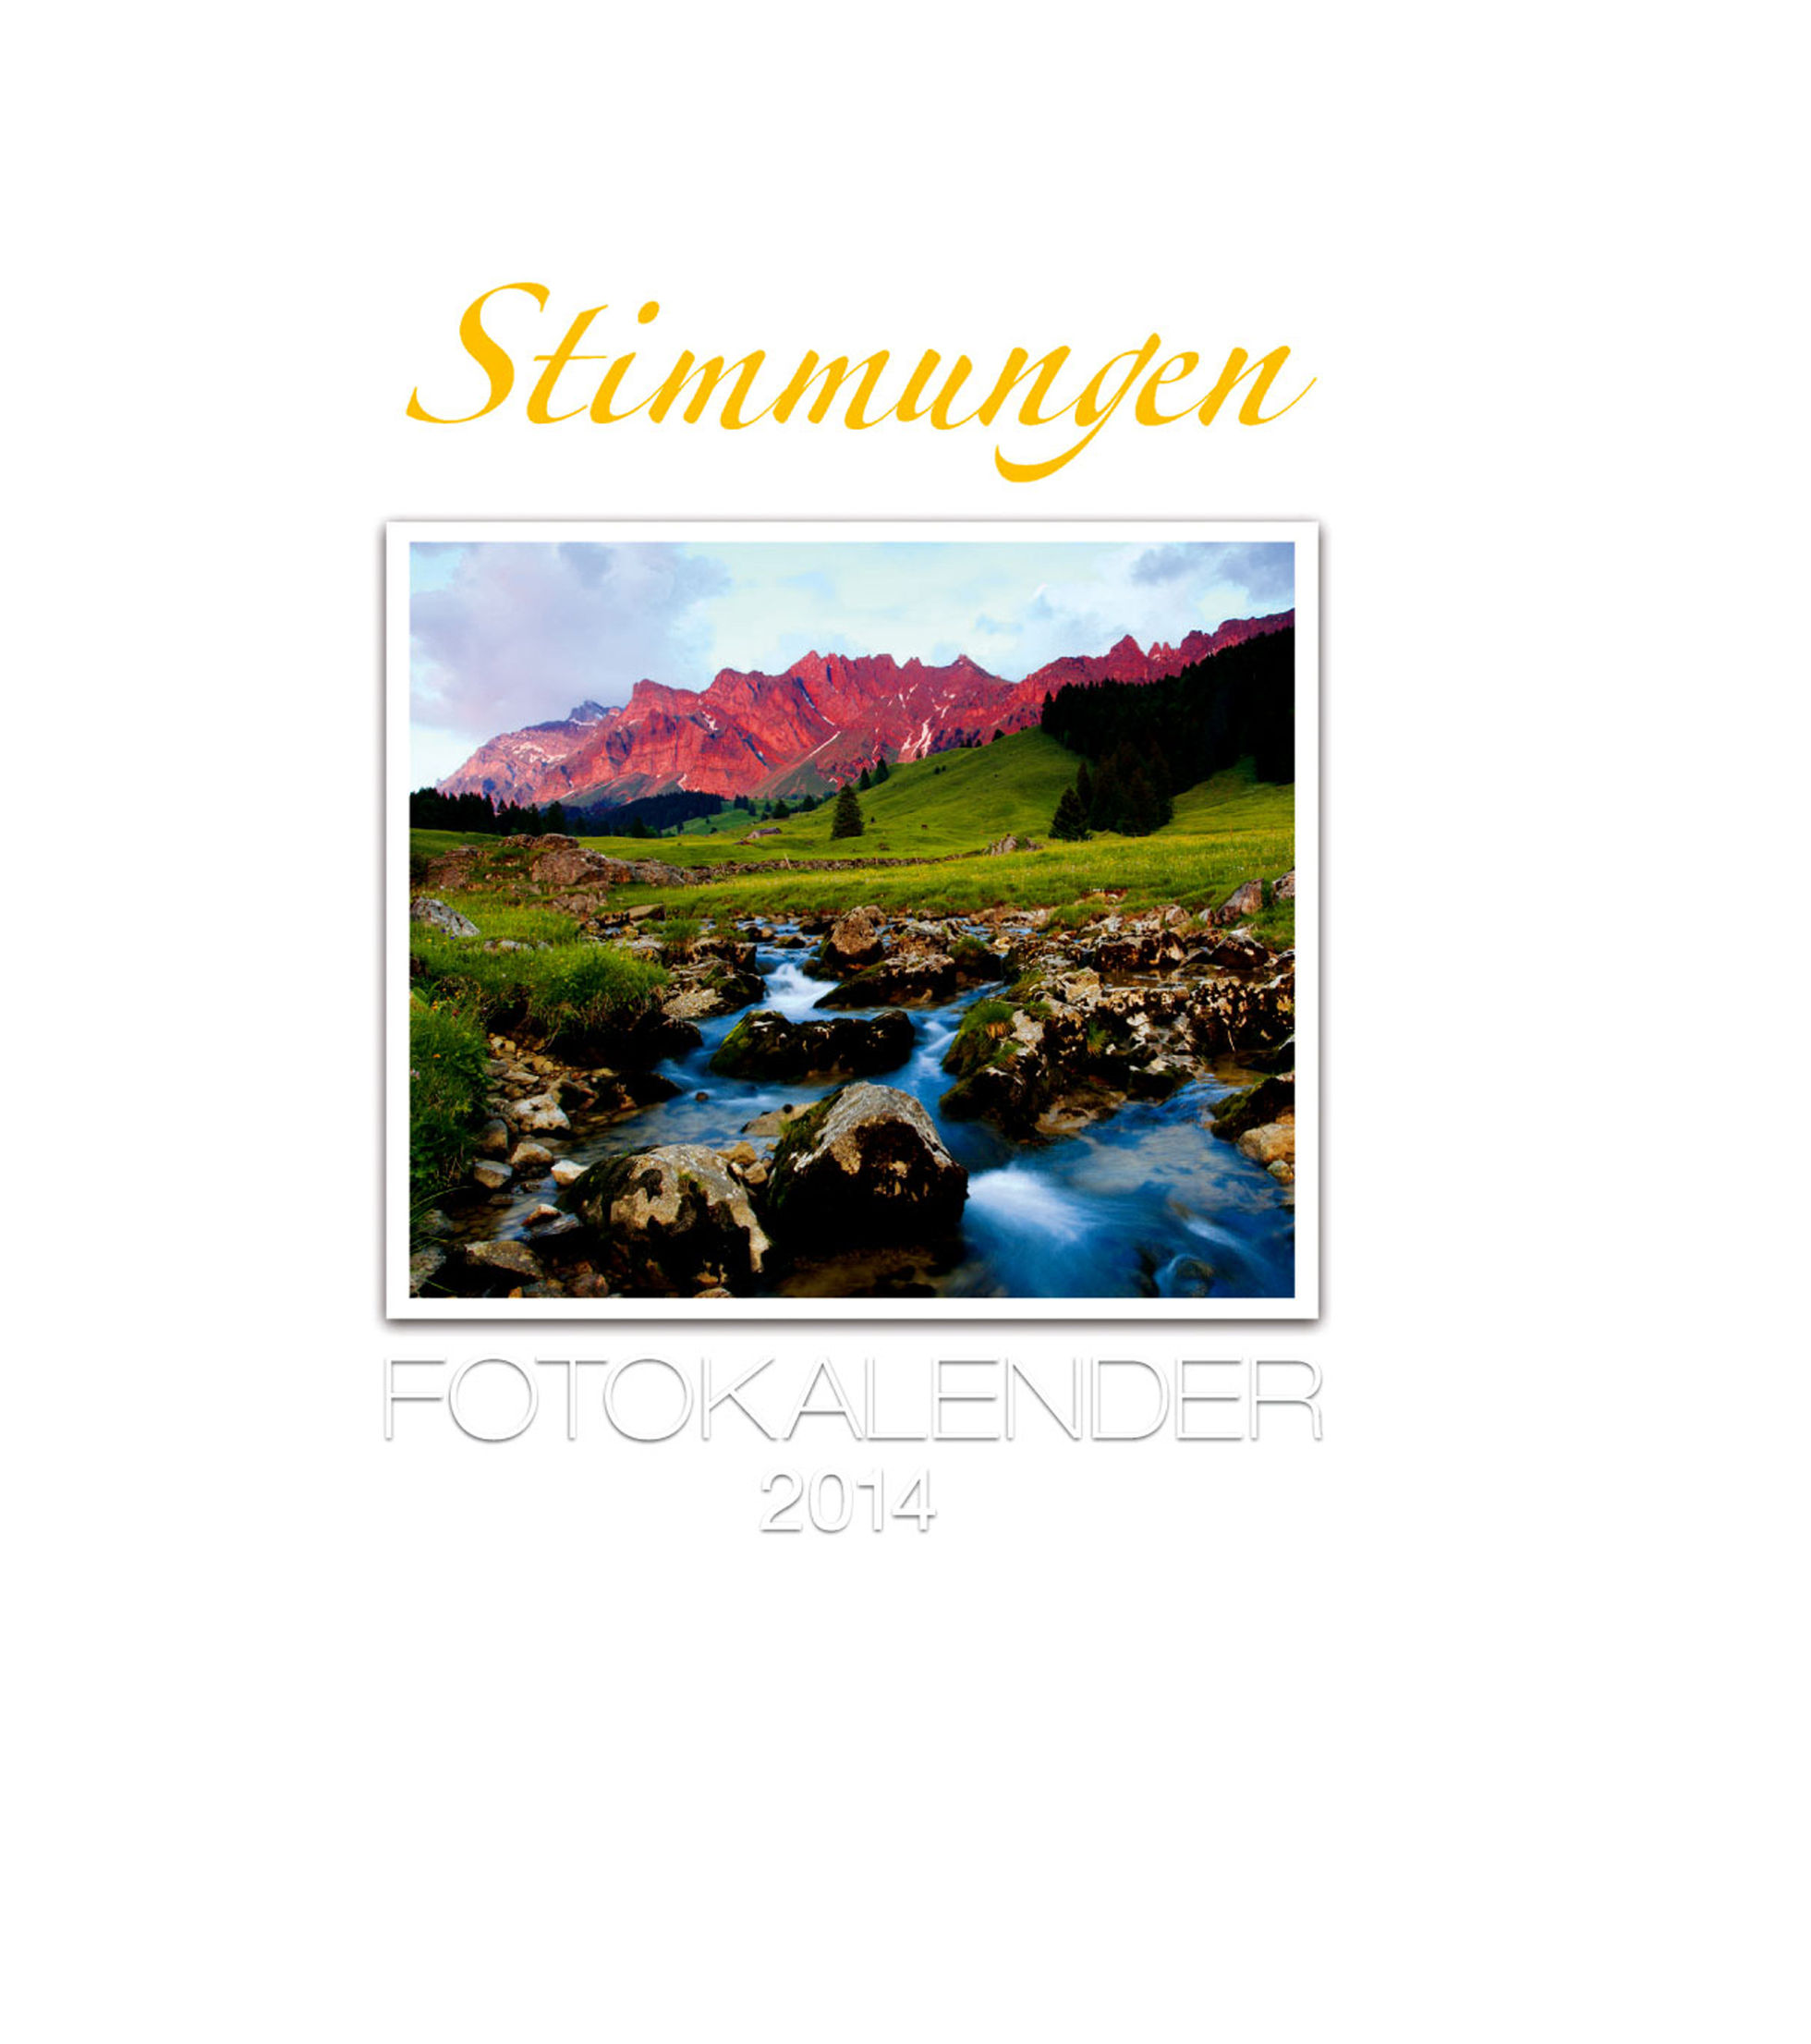 Fotokalender Stimmungen 2014, 3er-Set - Kalender bei Weltbild.de